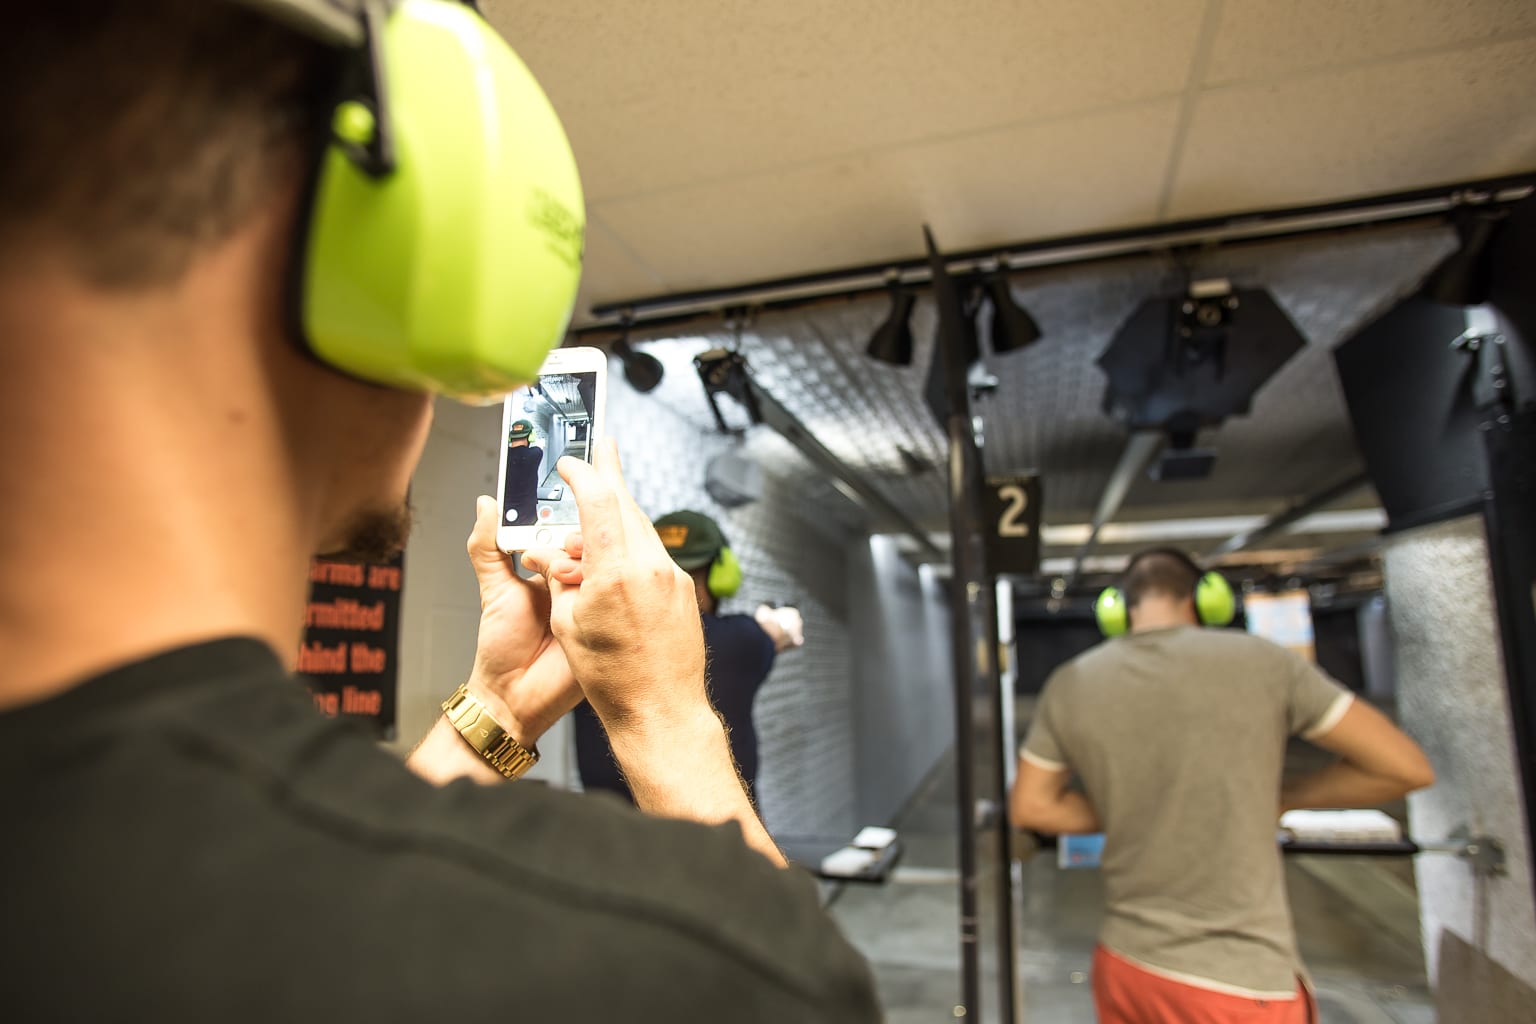 Group Range Target Practice - Bristlecone Shooting Range, Firearms Training & Retail Center Denver, CO